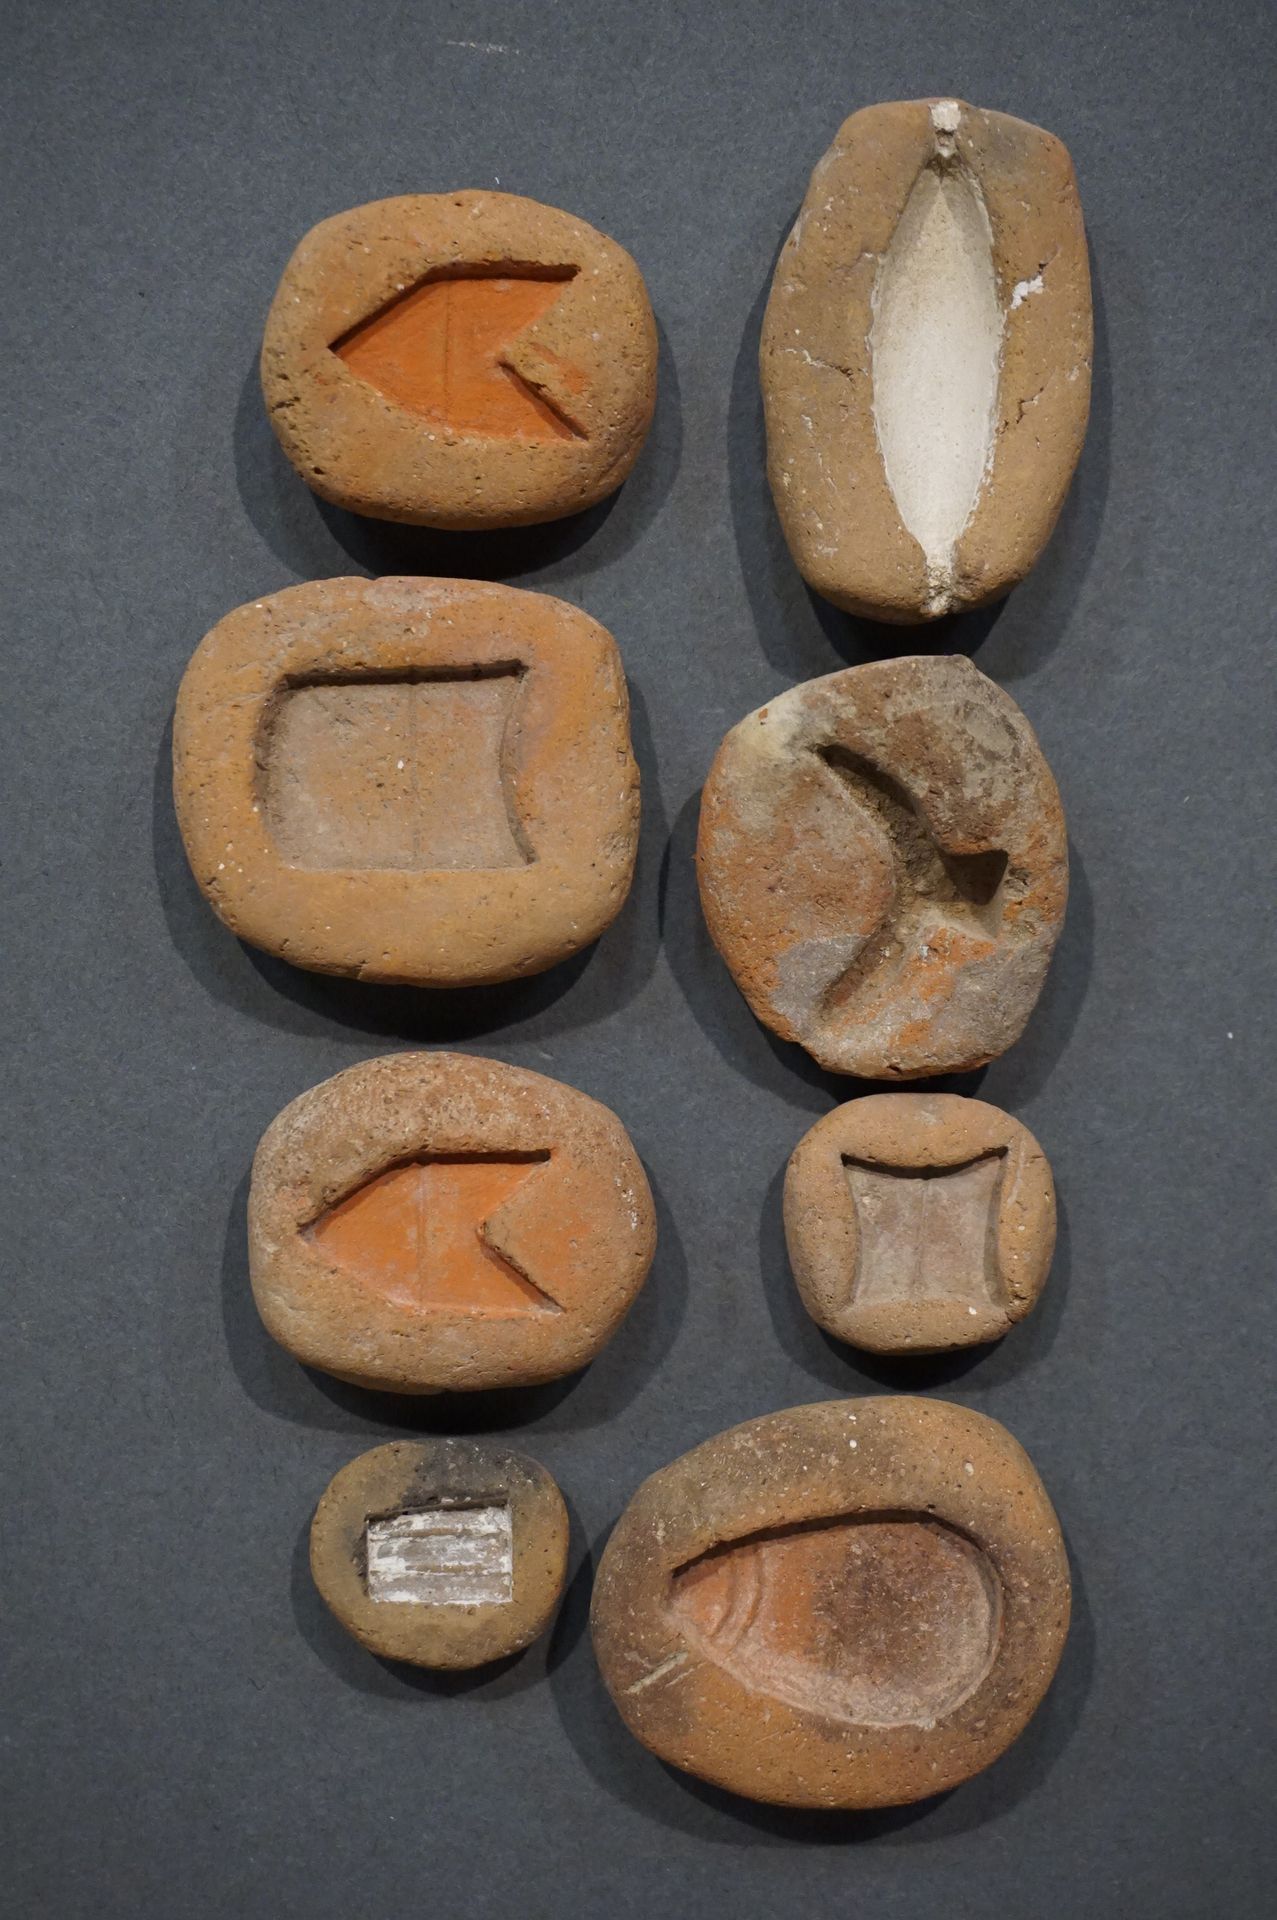 Null 珠子和镶嵌几何图案的模具。赭色赤土。埃及，新王国至晚期，约公元前1150-332年 l. 3厘米至5厘米